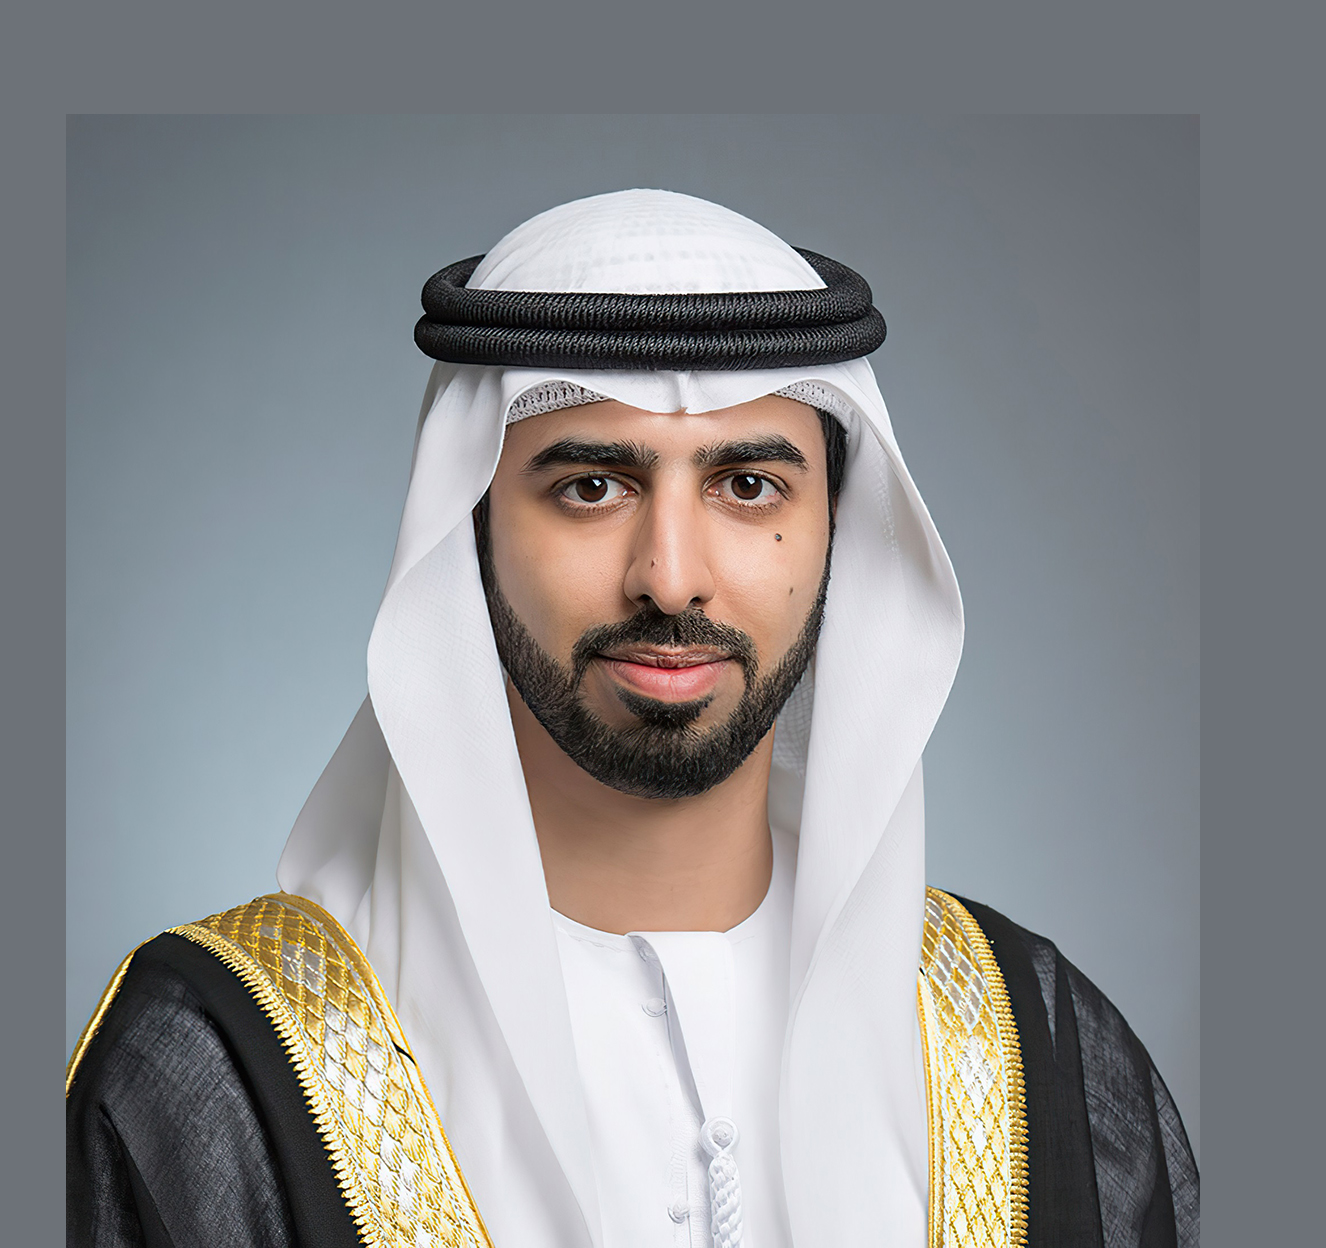 Dubai Chamber of Digital Economy appoints Khaled Al Shamsi as Executive Director